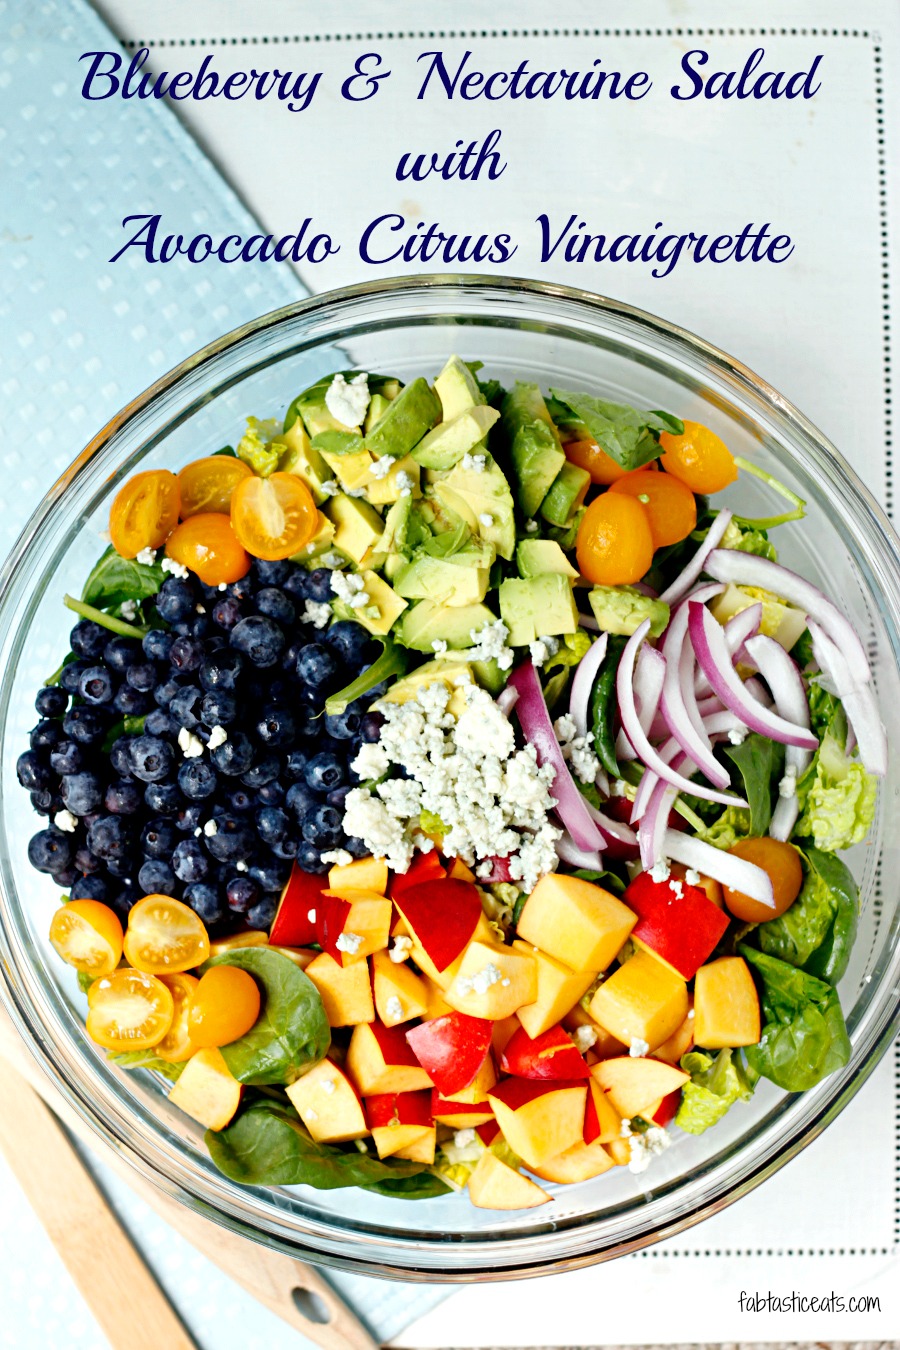 Blueberry and Nectarine Salad with Avocado Citrus Vinaigrette